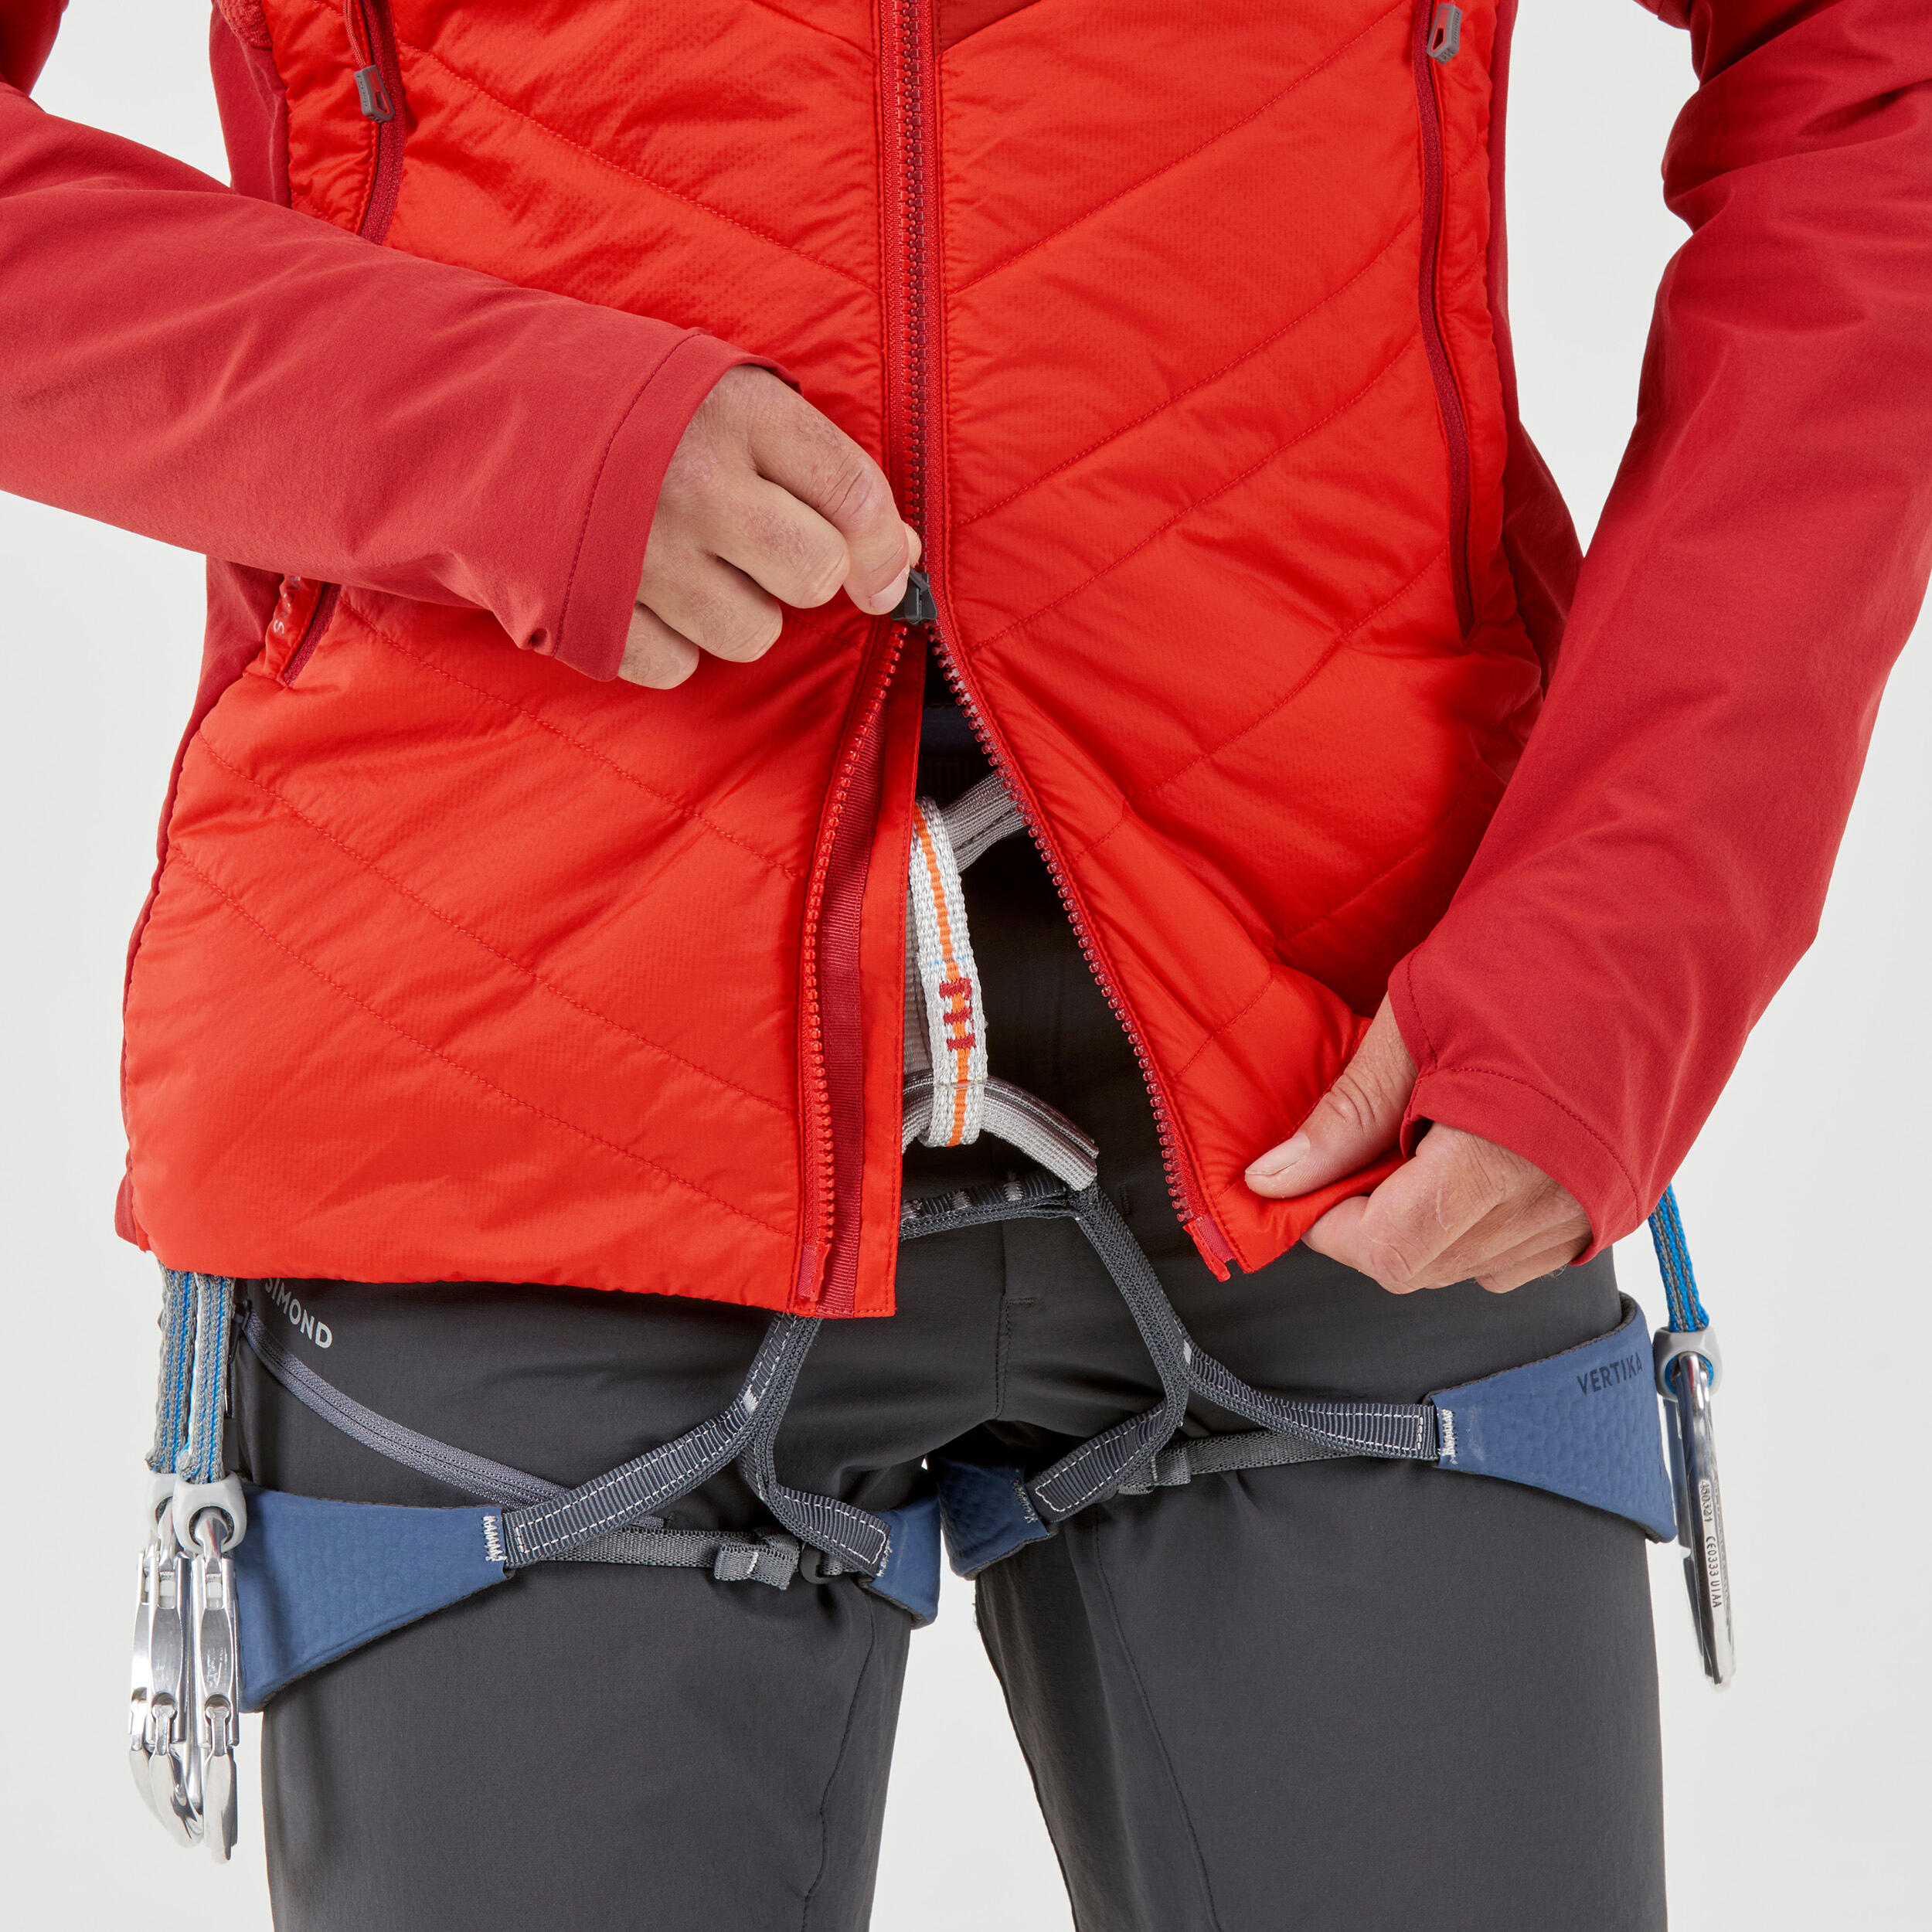 Men’s synthetic hybrid mountaineering down jacket - Sprint Orange 12/15